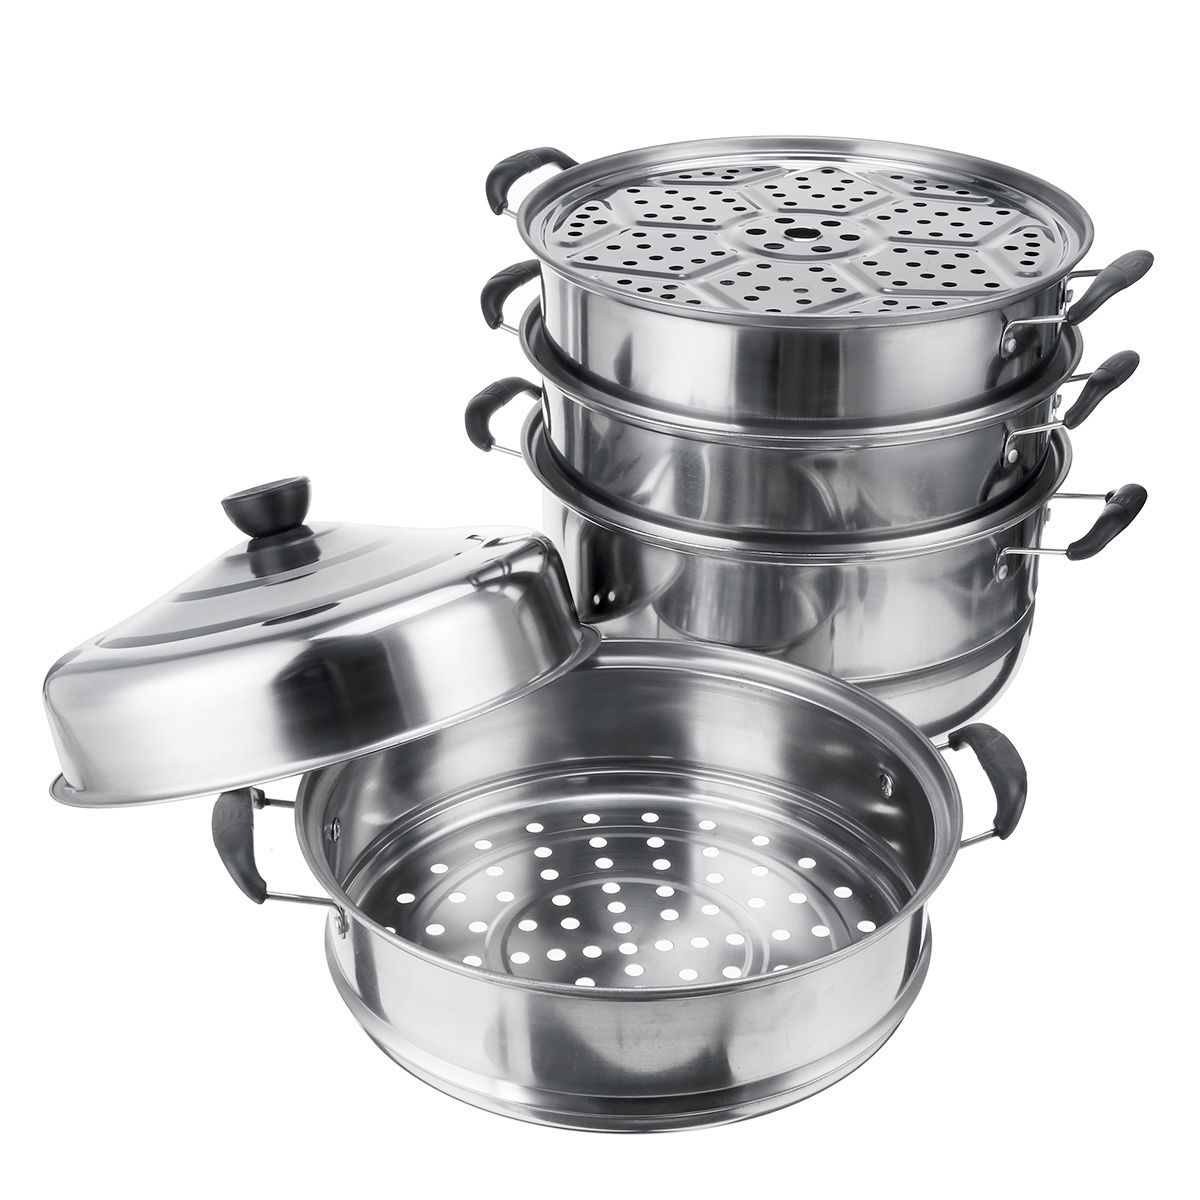 5-Layer-Sainless-Steel-Kitchen-Hot-Pot-Thick-Steamer-Pot-Soup-Dessert-Steam-Cook-Cooking-Cage-1721442